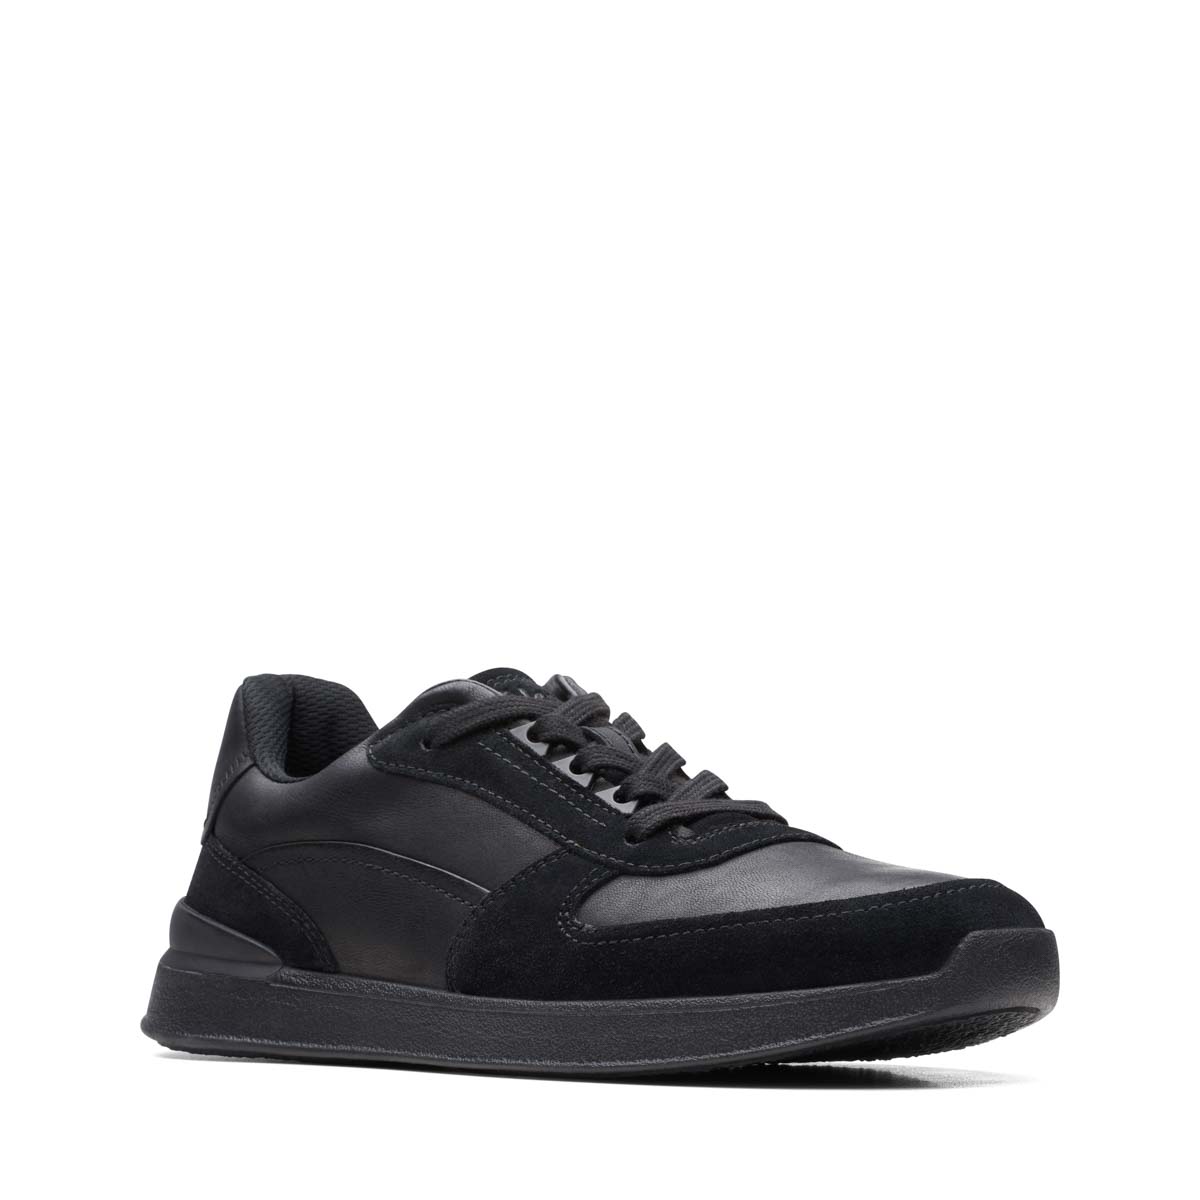 Clarks Racelite Move Black leather Mens comfort shoes 7055-97G